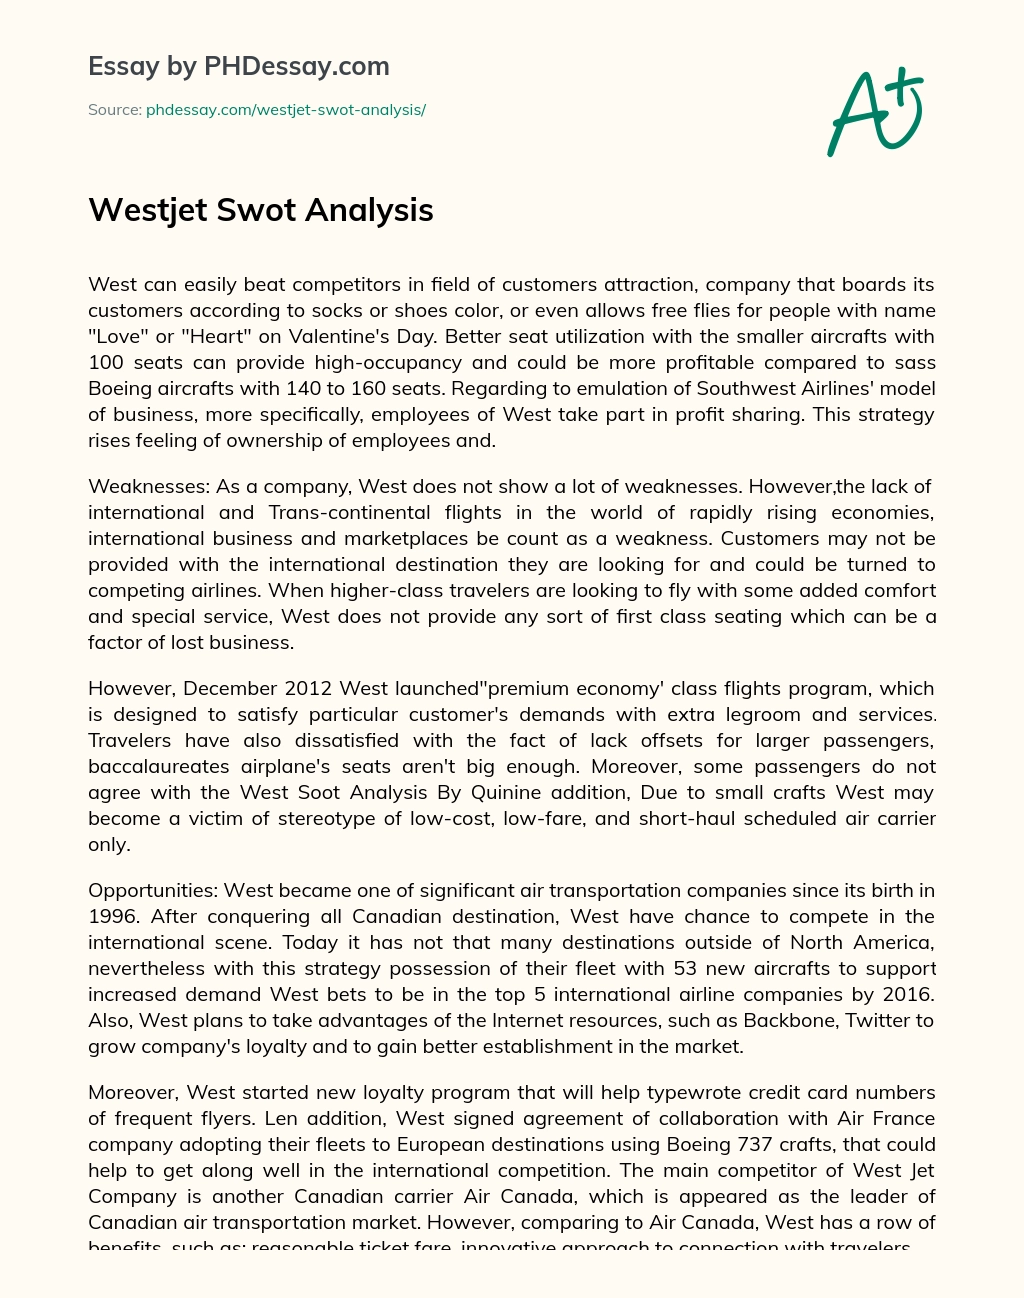 Westjet Swot Analysis essay